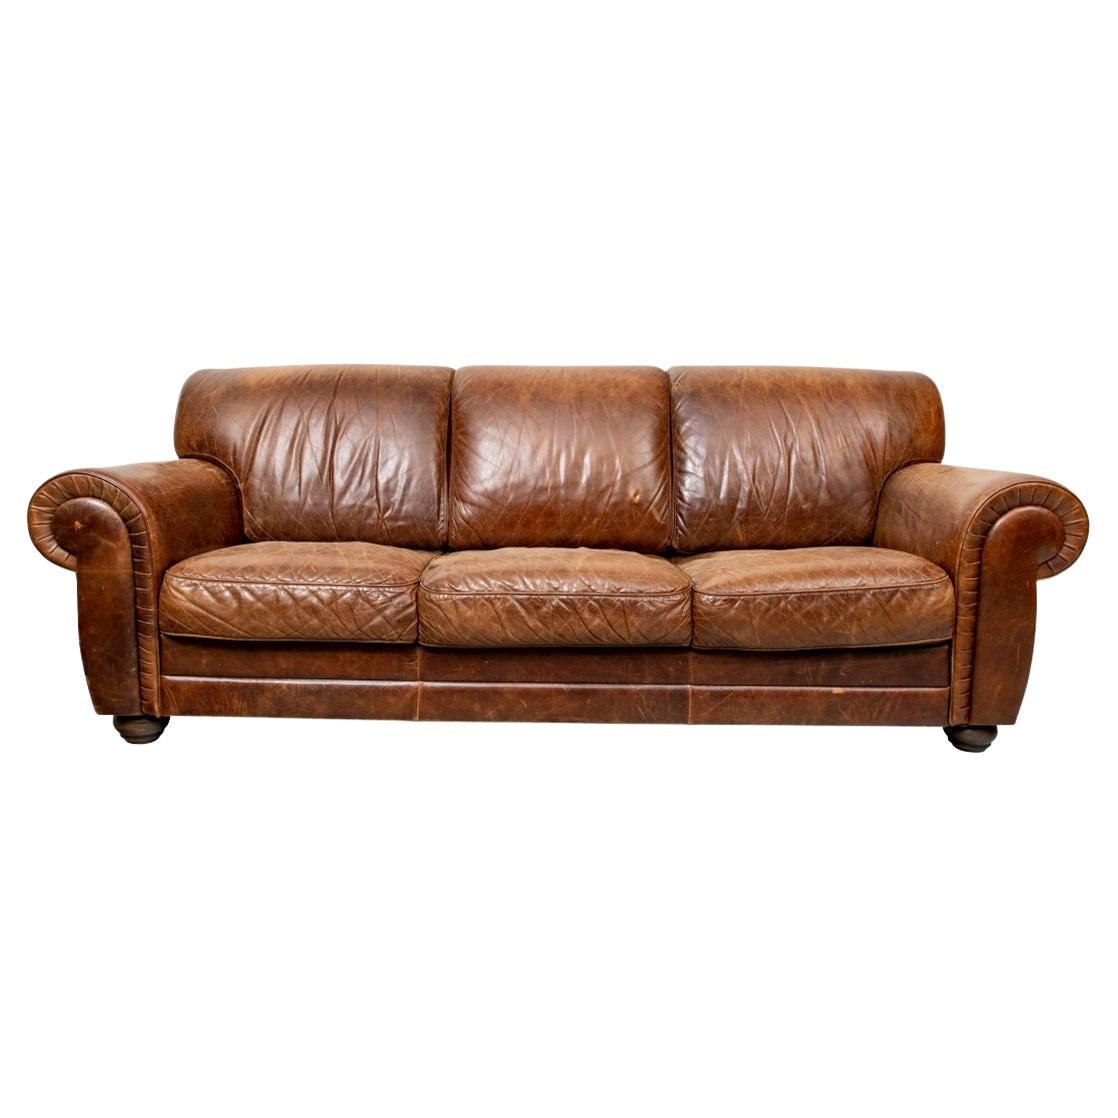 Classic Worn Leather Three Seat Sofa For Sale